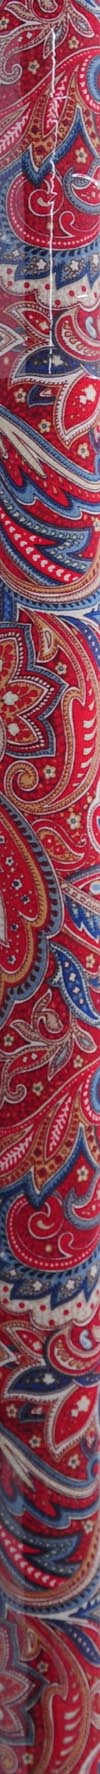 Tkanine pamuk 44 široka laurenska cvjetna paisley crvena tkanina za šivanje i zanat